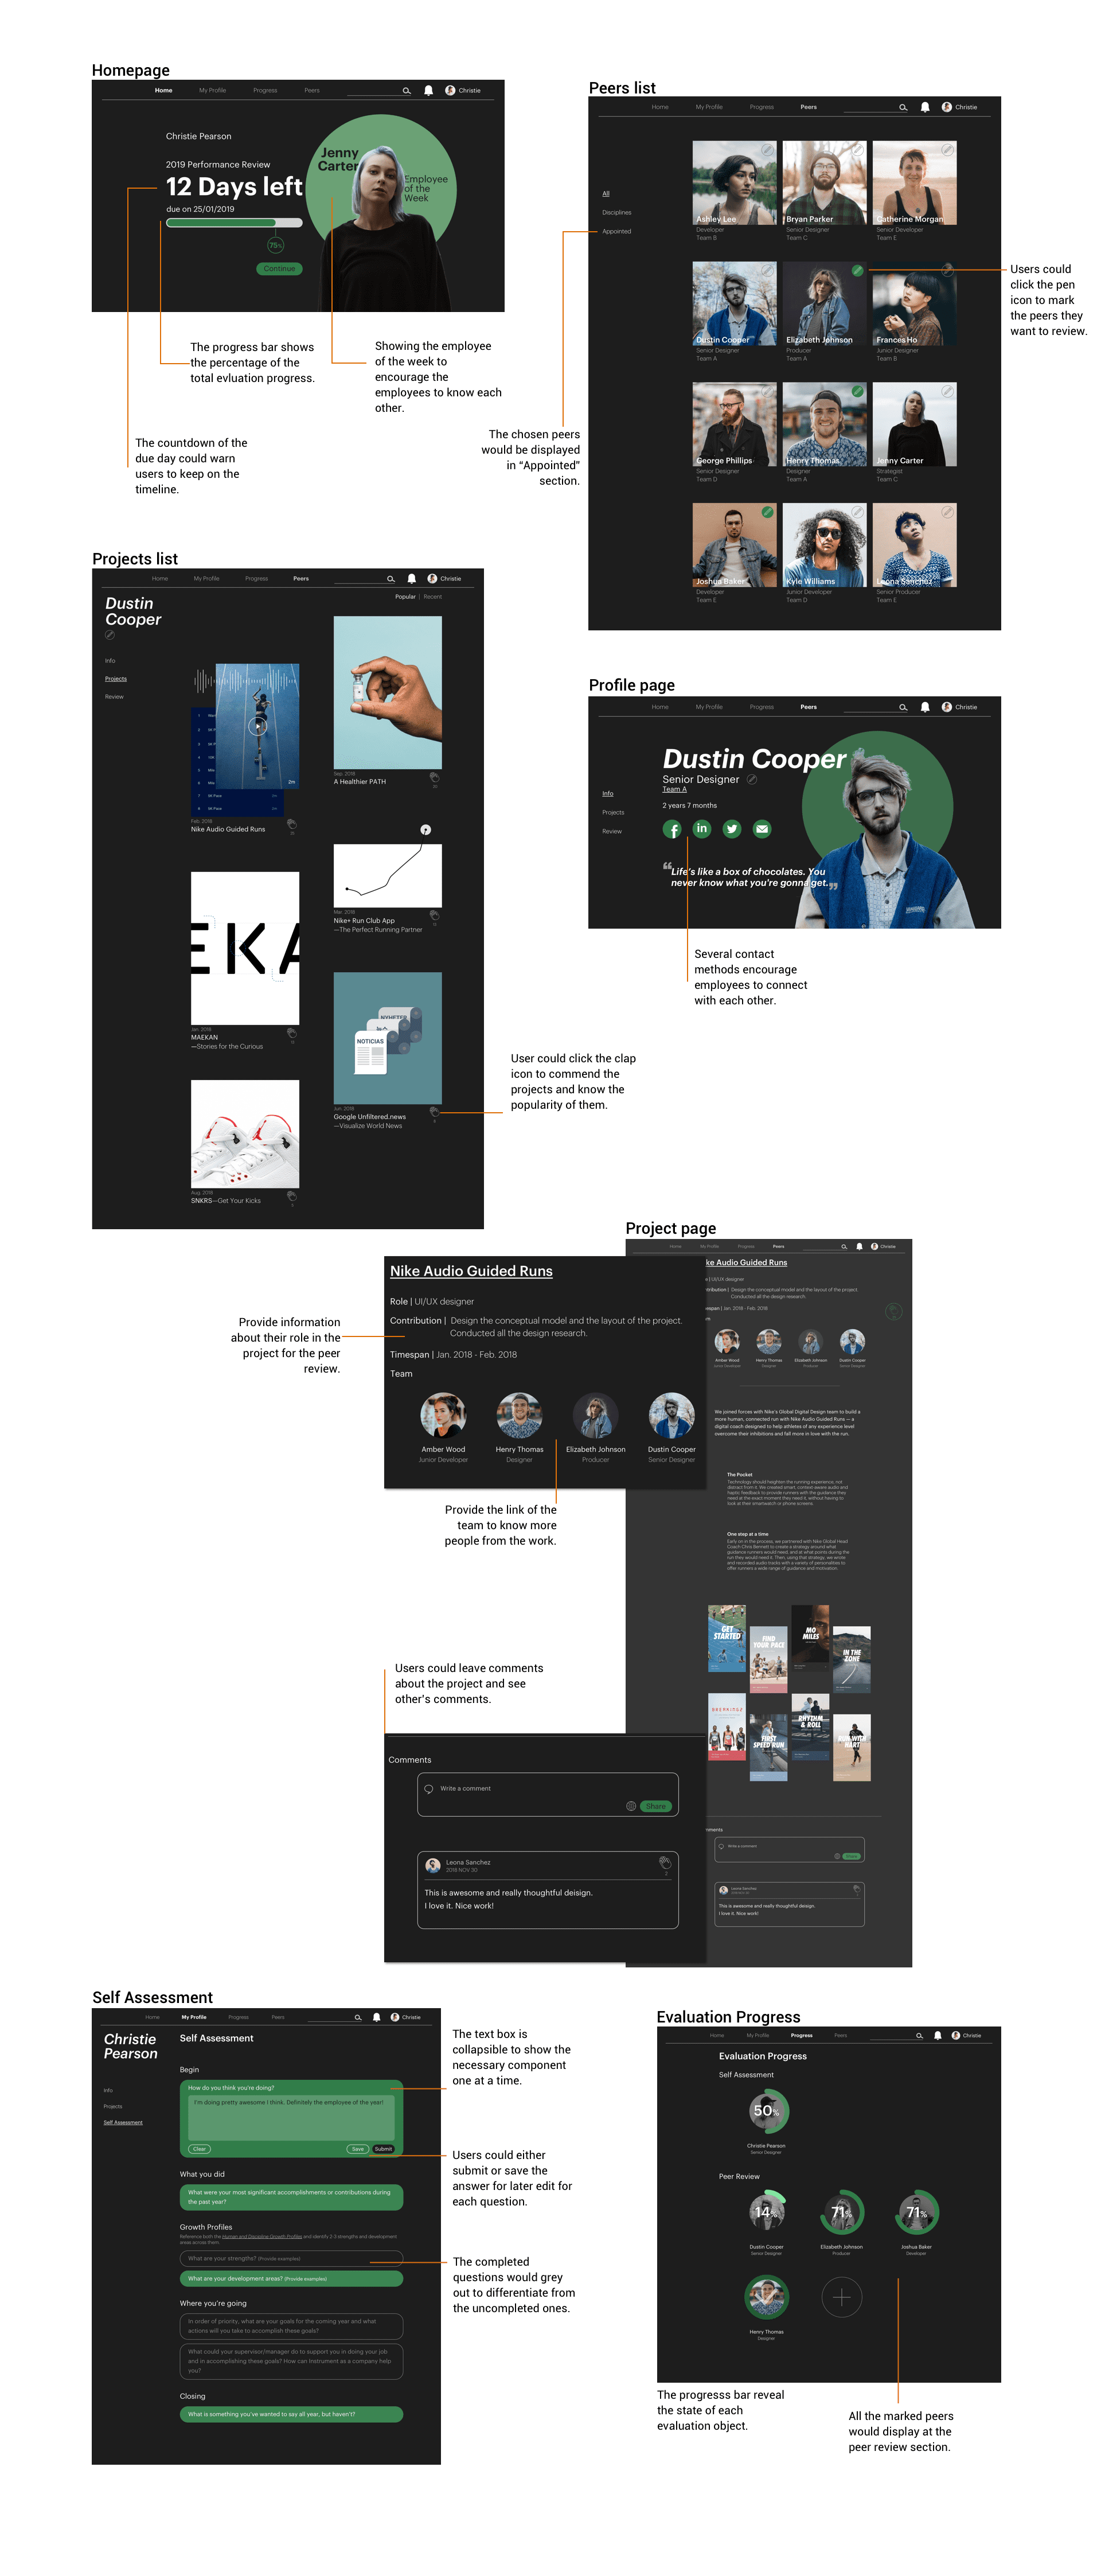 Design breakdown